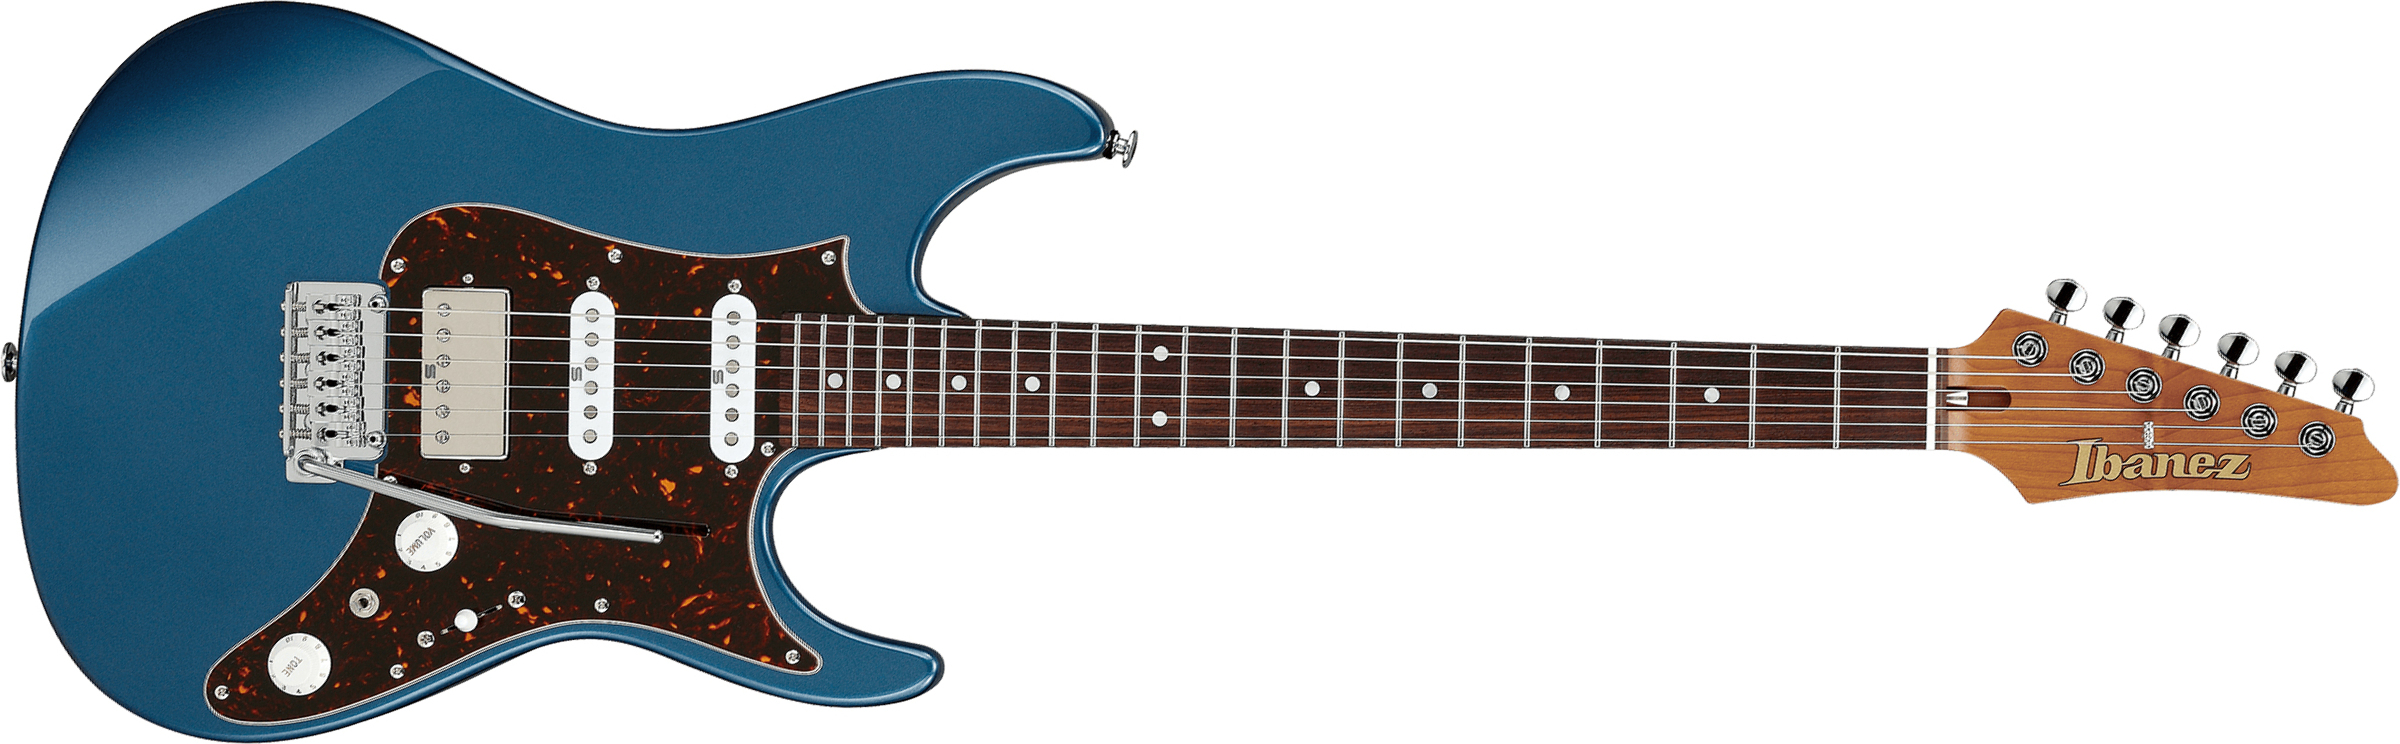 Ibanez Az2204n Pbm Prestige Jap Hss Seymour Duncan Trem Rw - Prussian Blue Metallic - Str shape electric guitar - Main picture